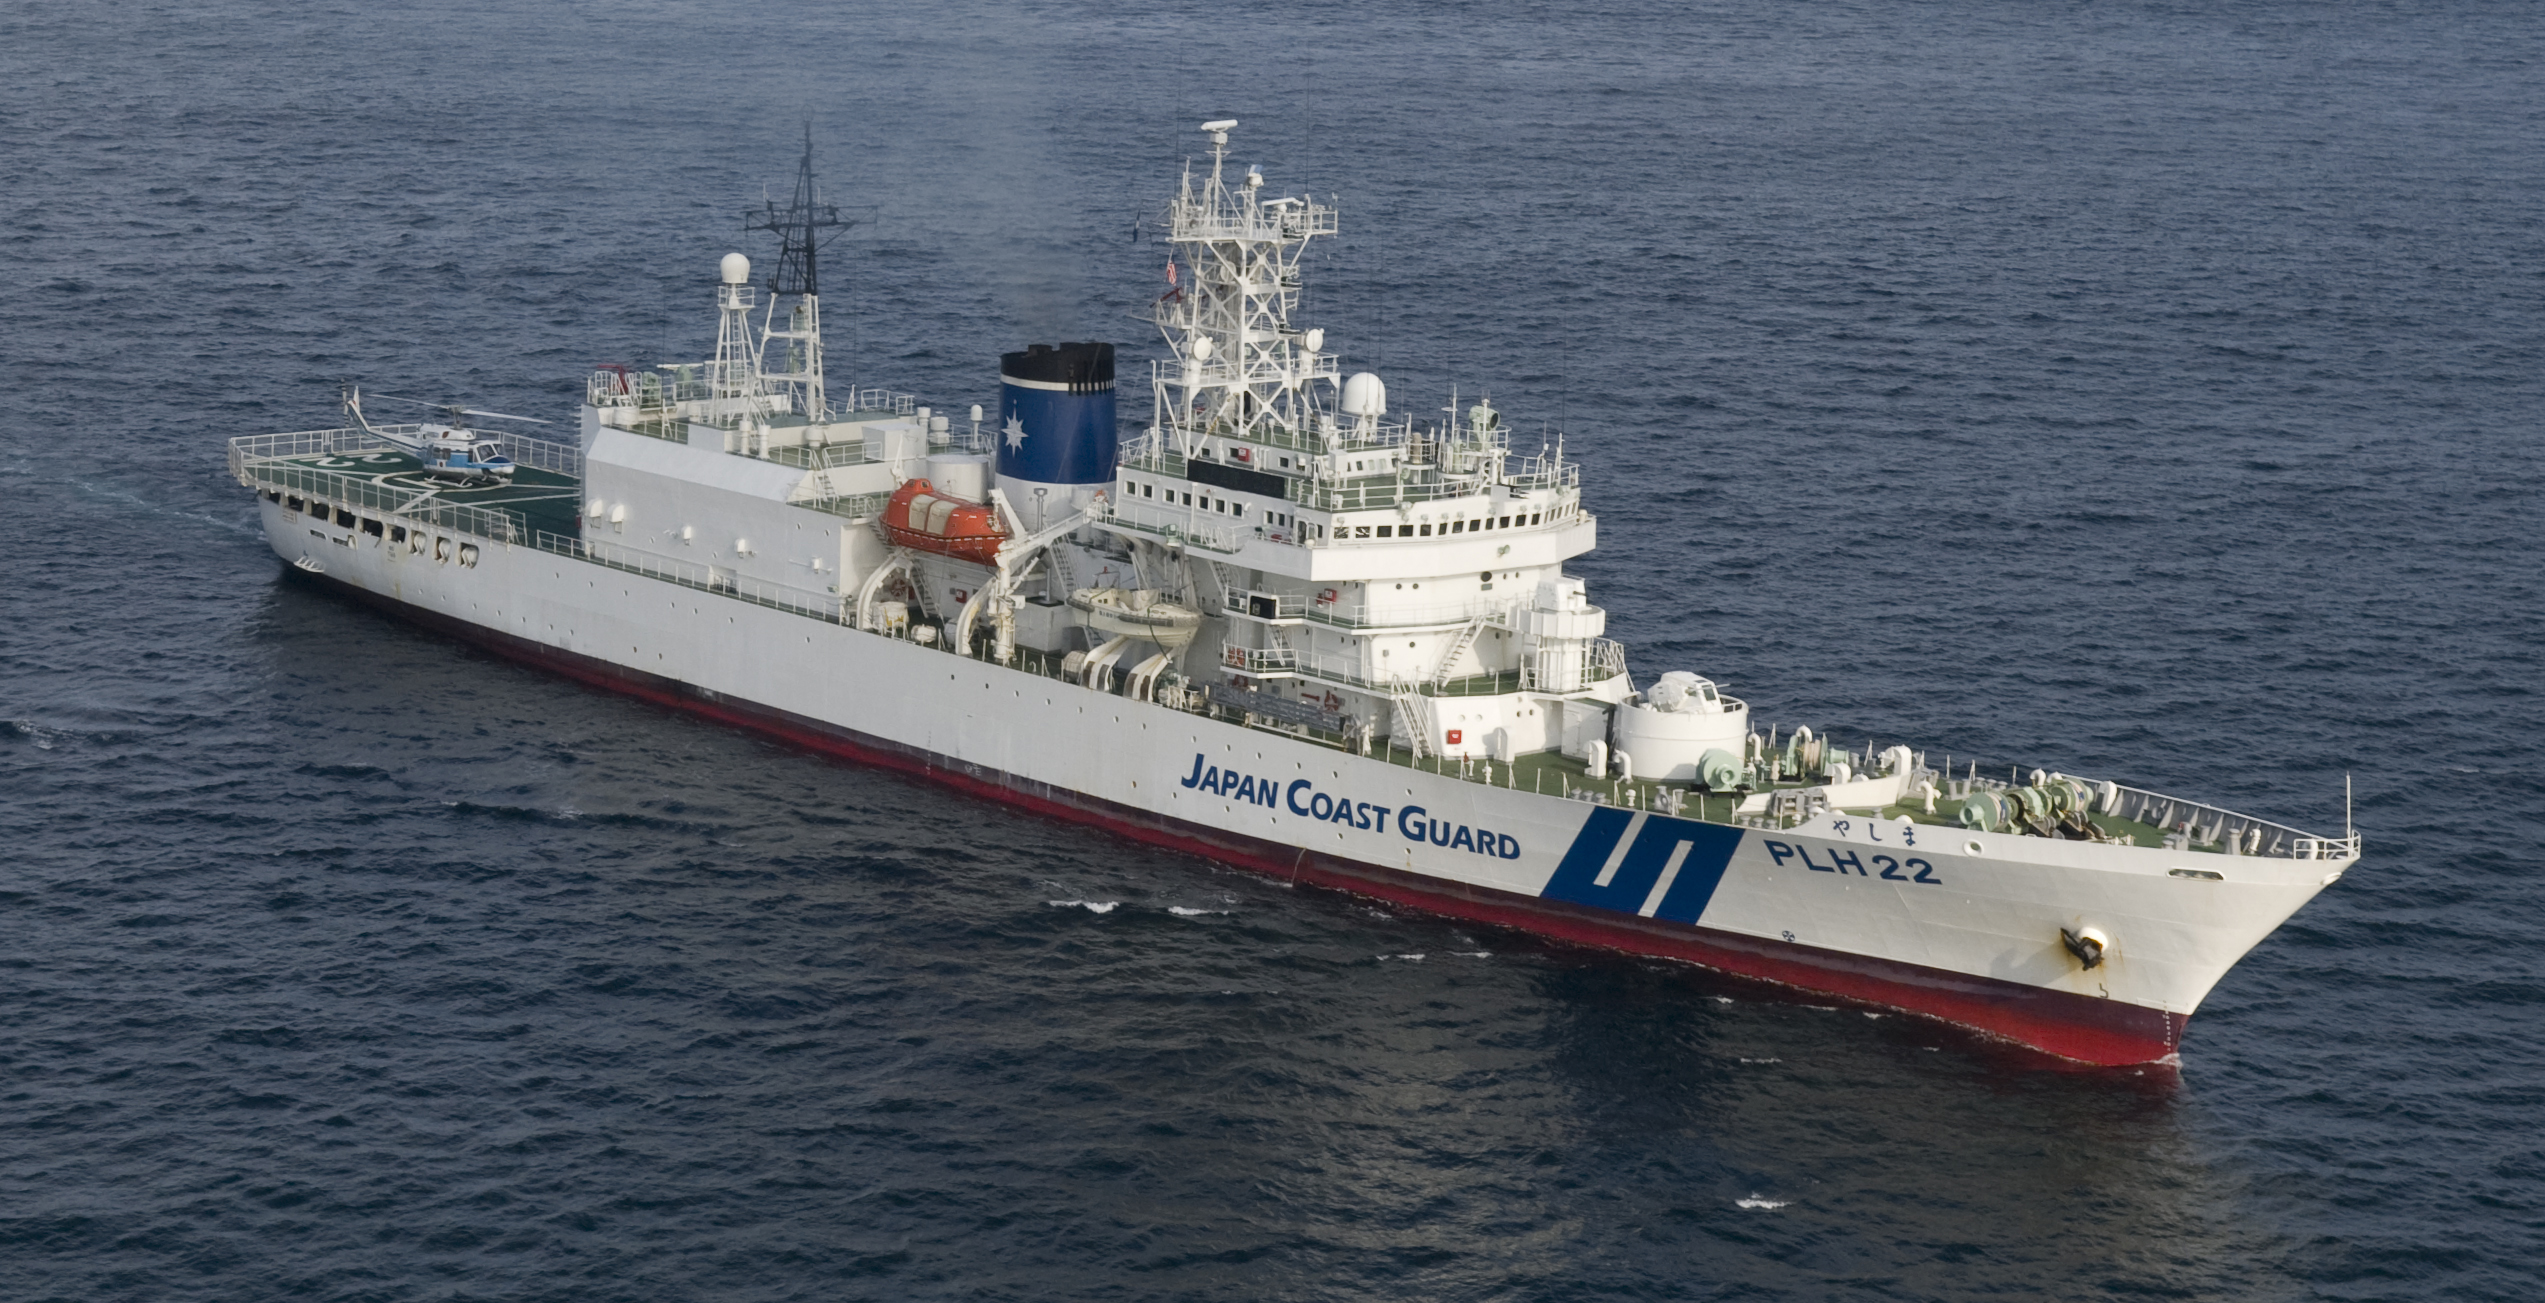 Japan_Coast_Guard_vessel_Yashima_%28PLH_22%29.jpg